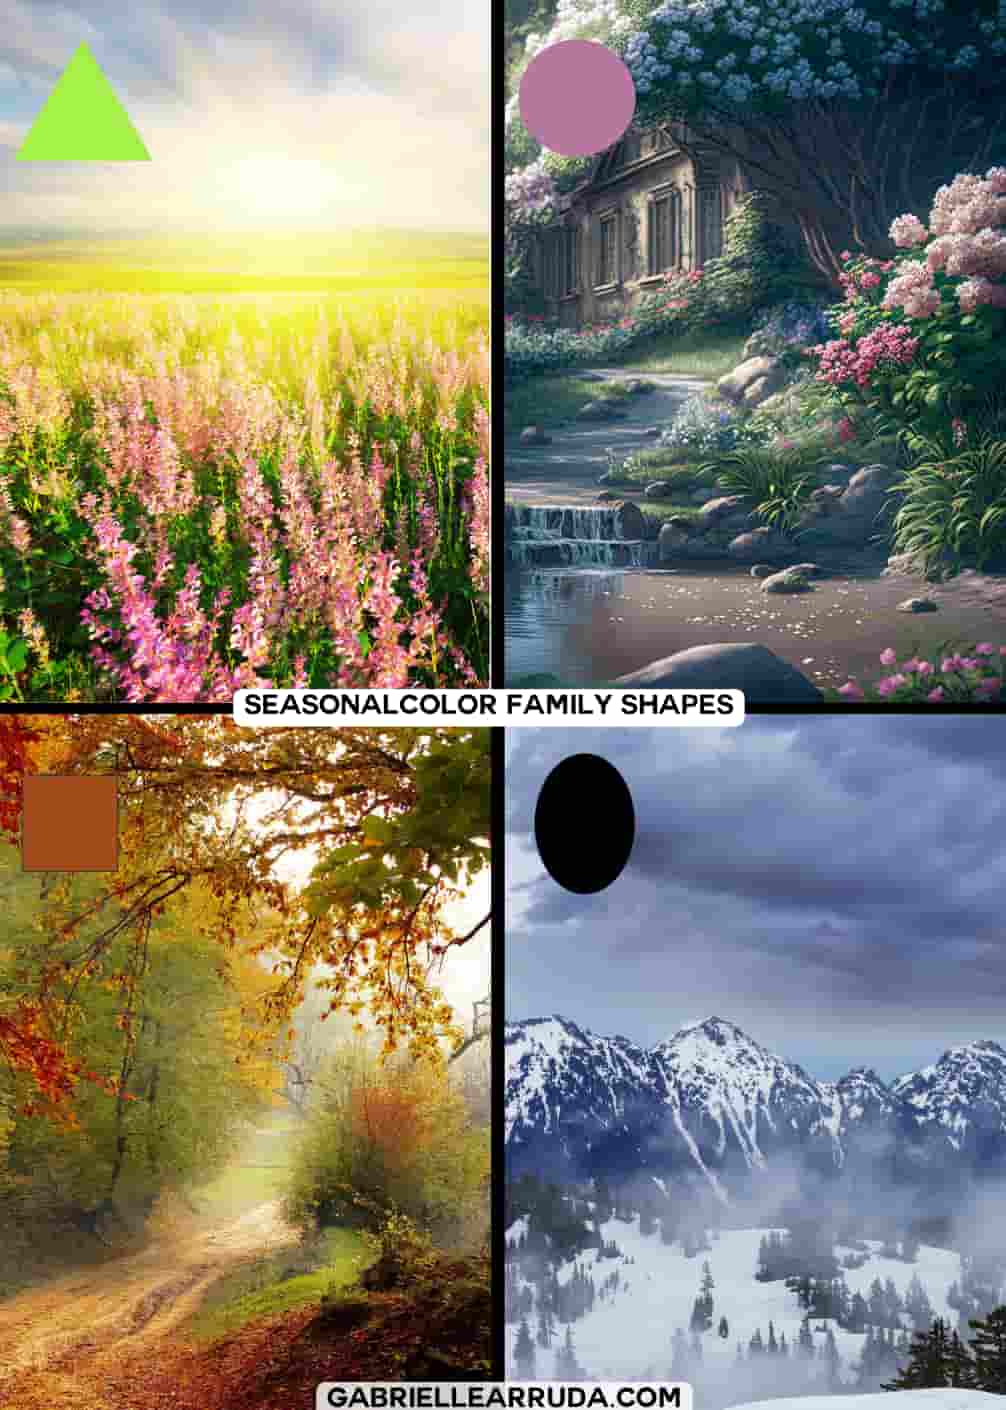 four main seasons with shape associations